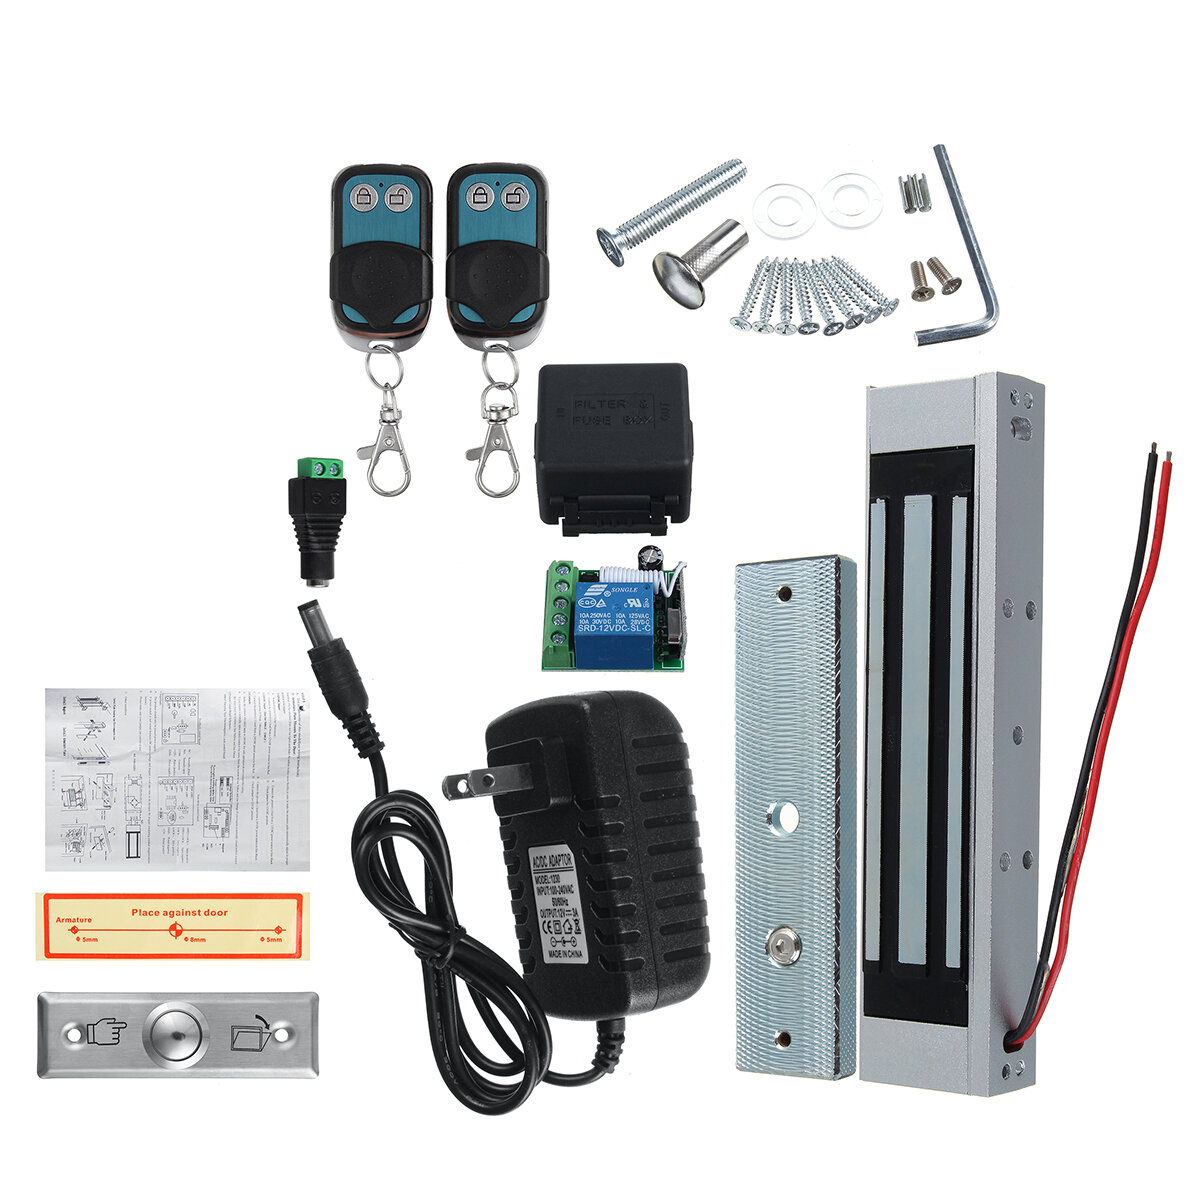 Image of Door Access Control System Electric Magnetic Door Lock 300LB & 2 Remote Controls